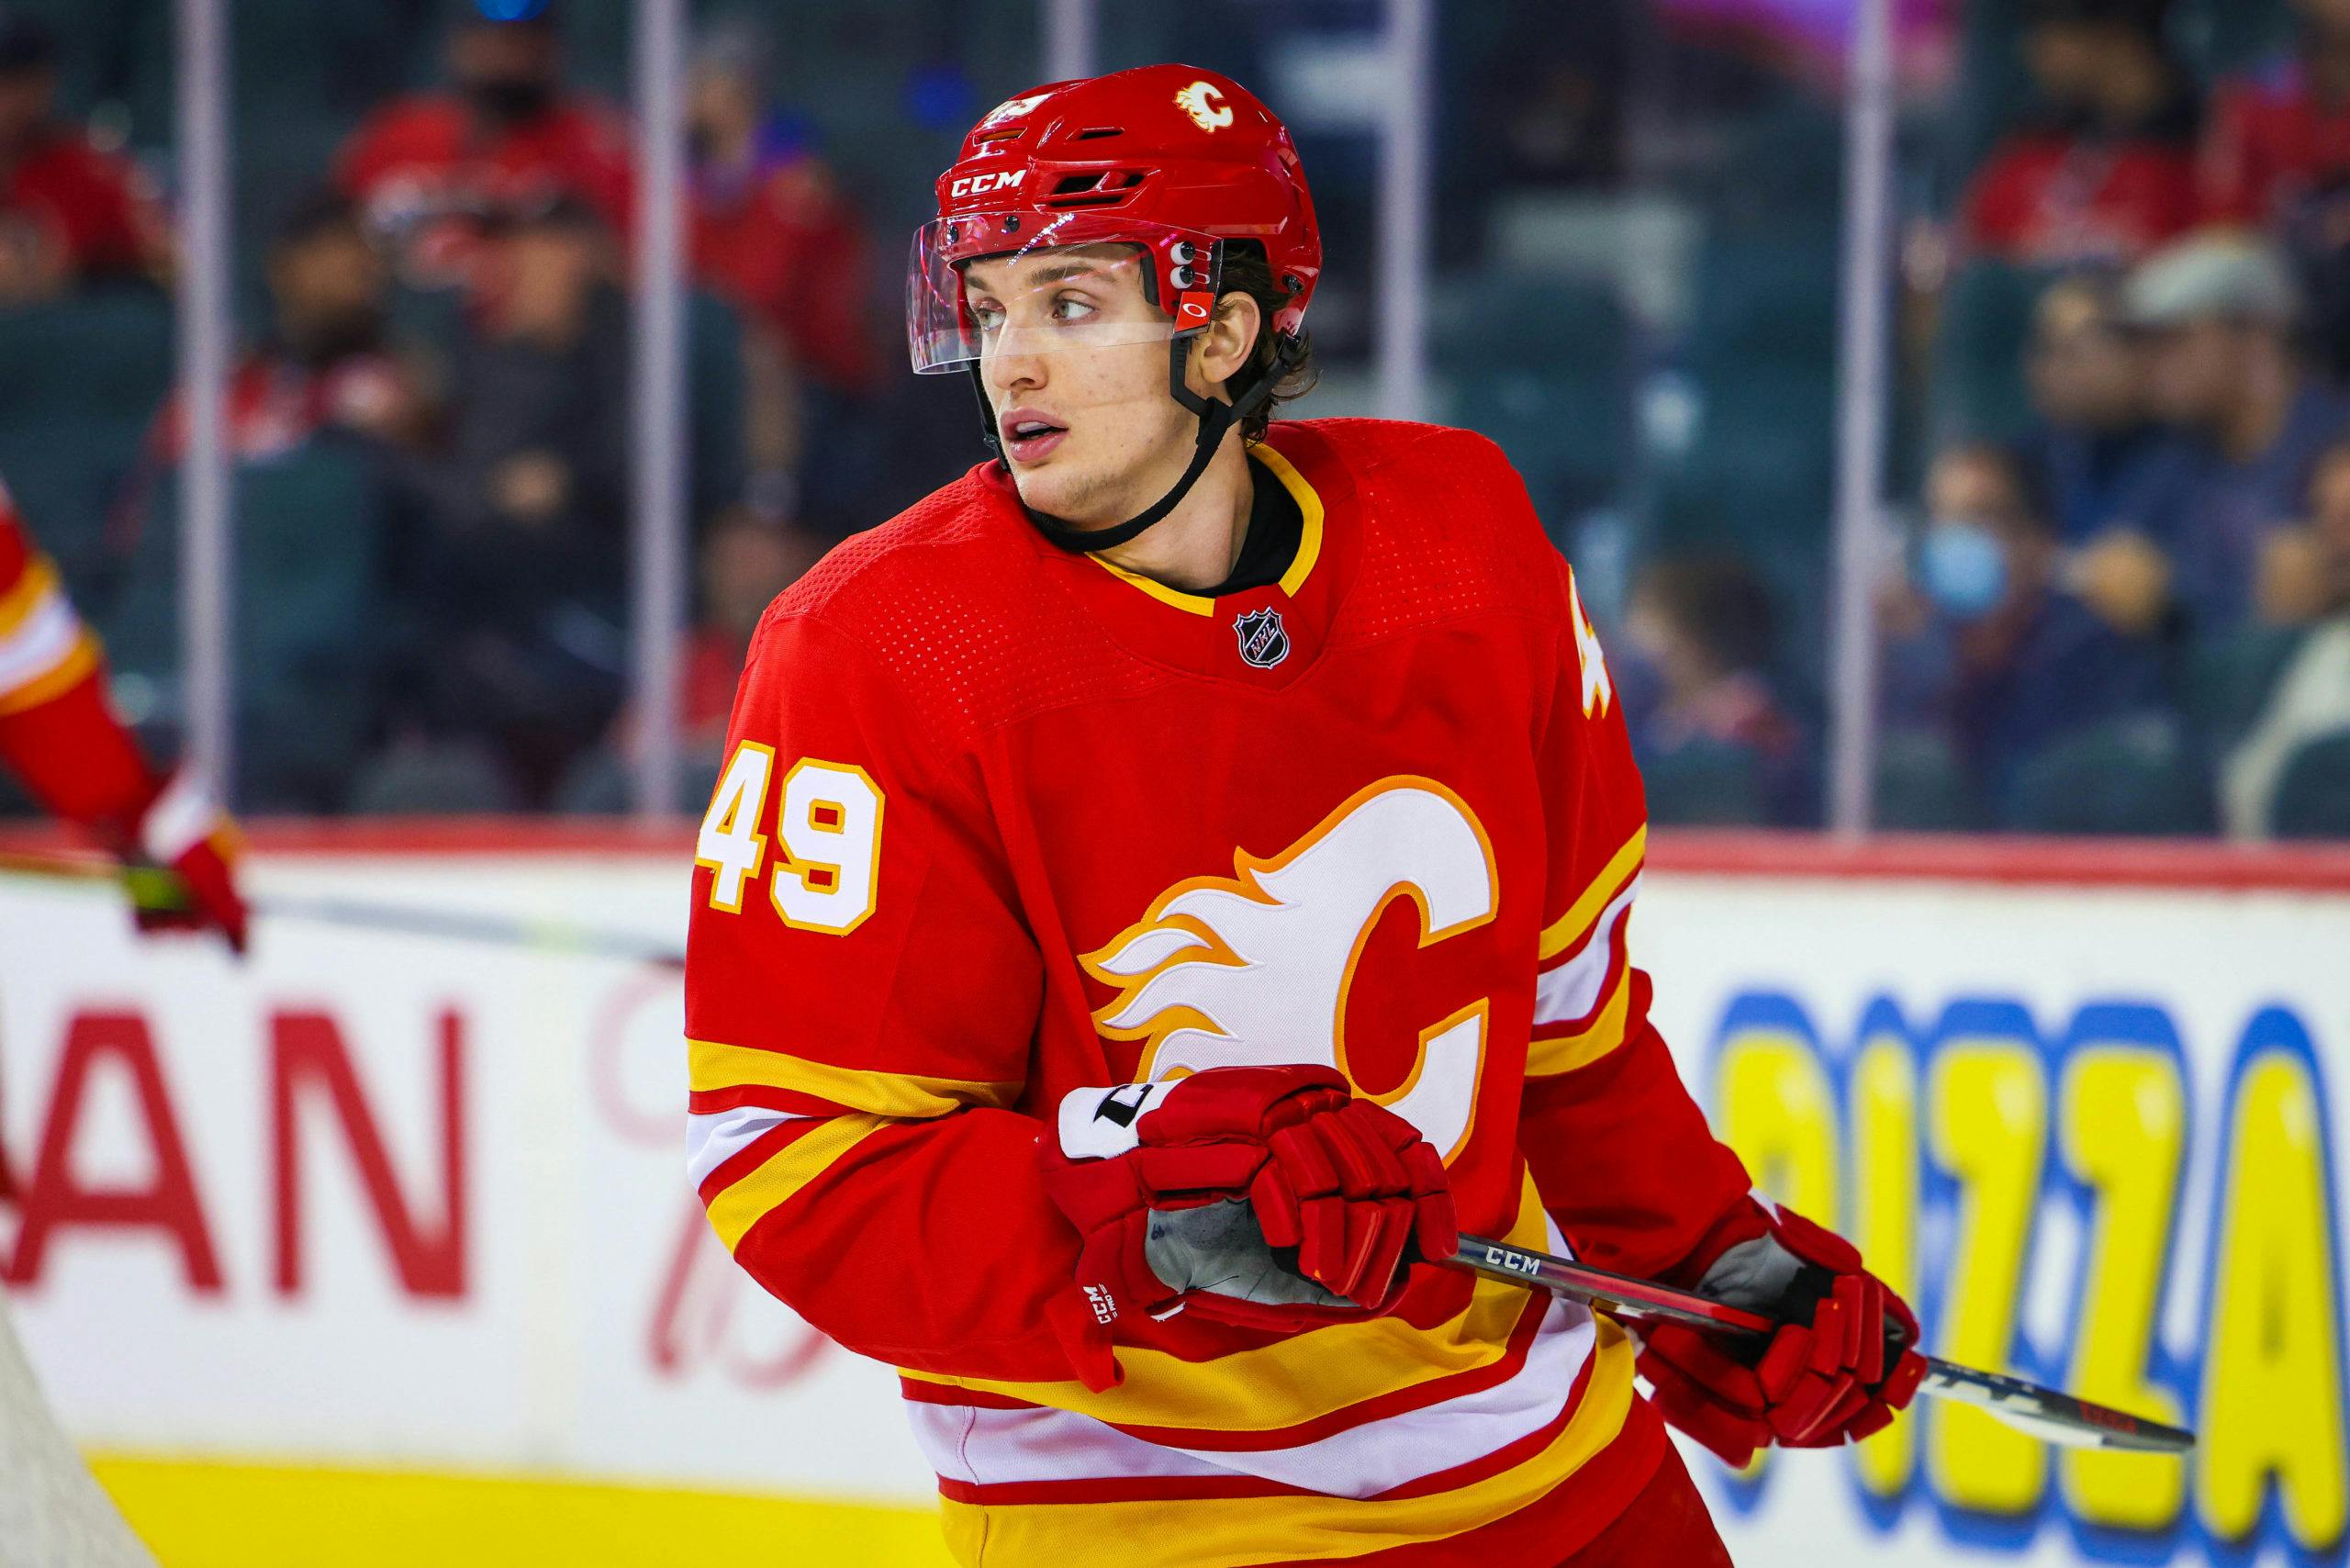 Flames prospect Pelletier displayed leadership skills at world juniors